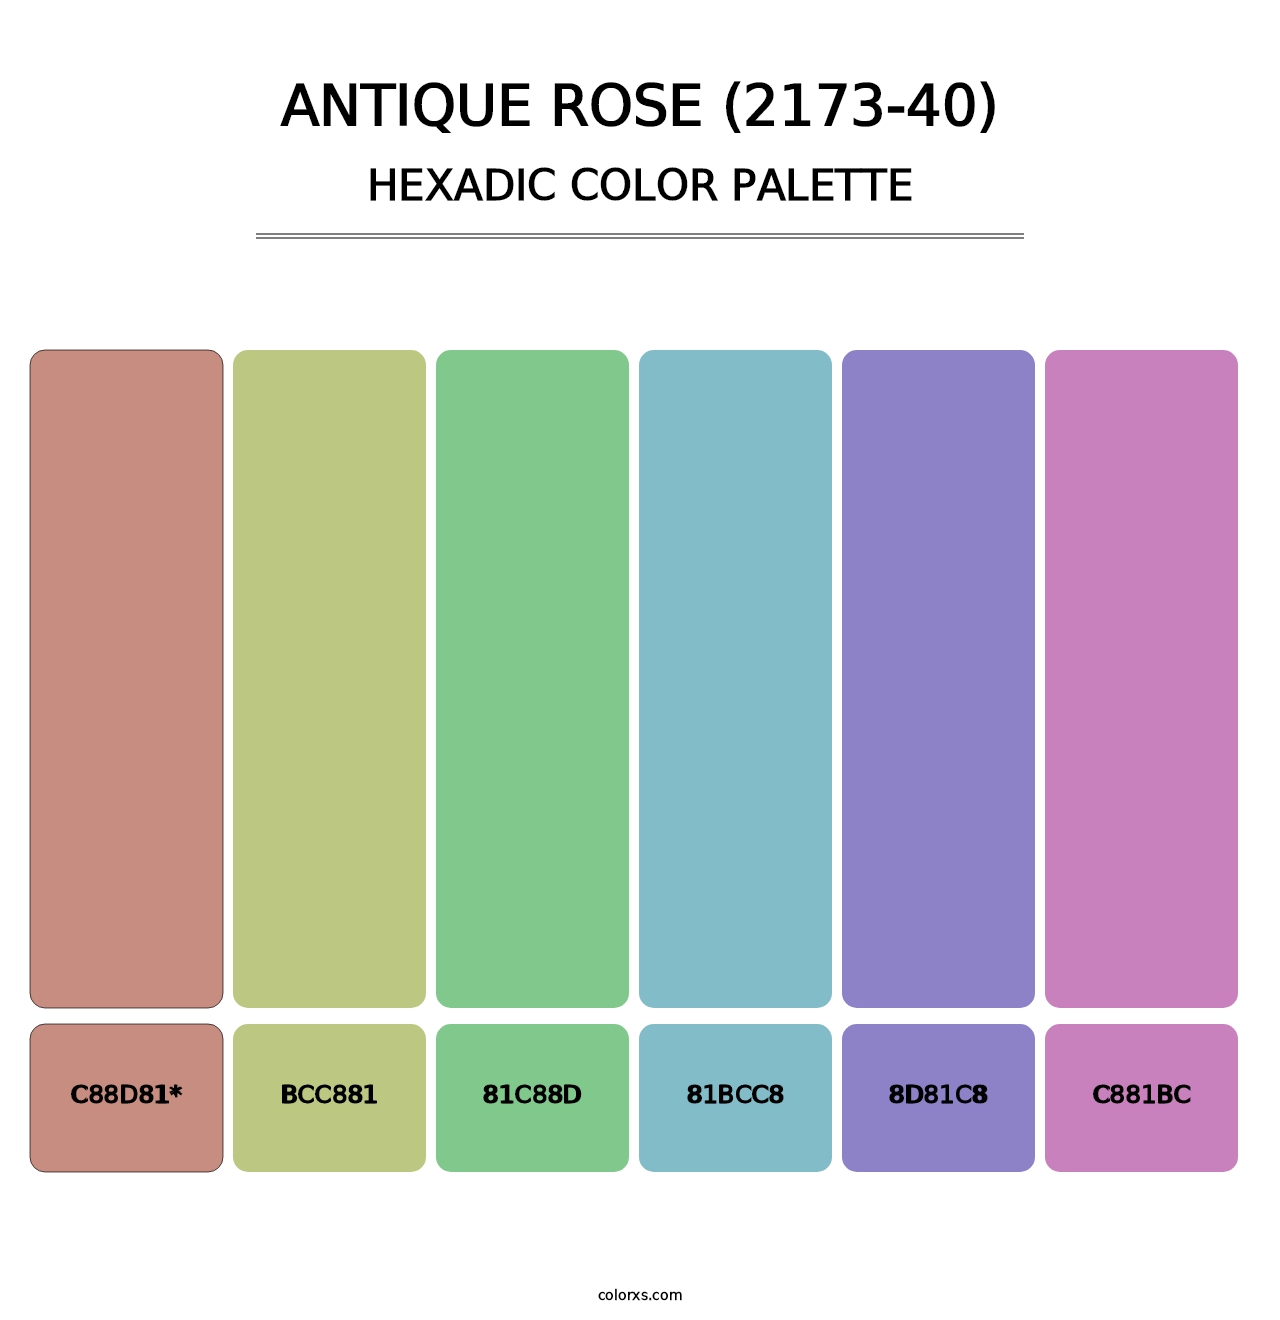 Antique Rose (2173-40) - Hexadic Color Palette